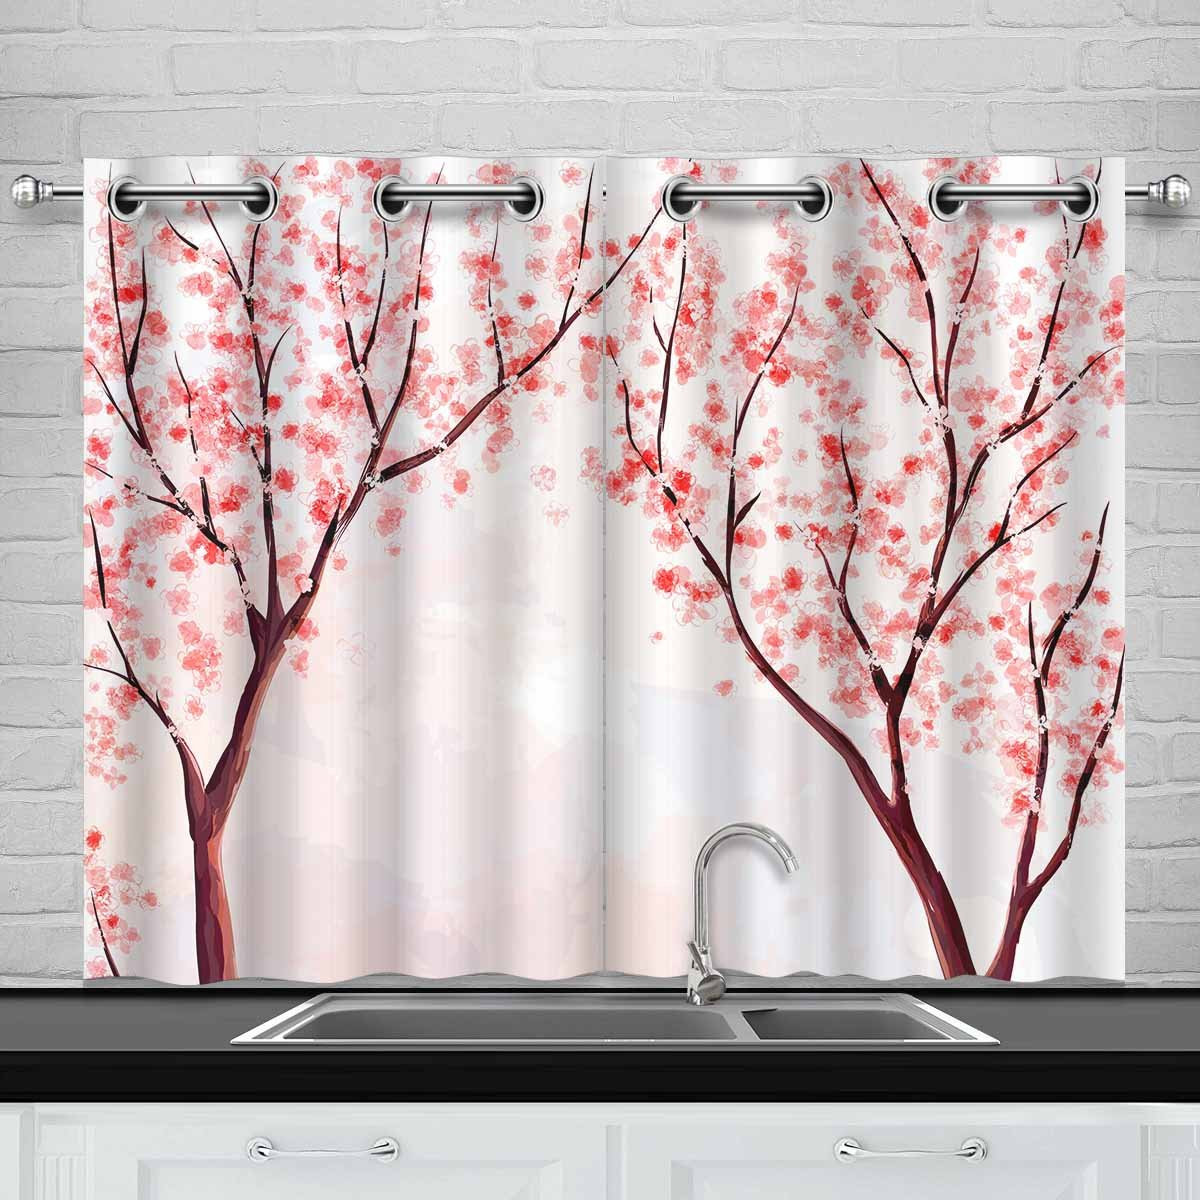 Cherry Kitchen Curtains
 MKHERT Cherry Blossom Window Curtain Kitchen Curtain 26x39